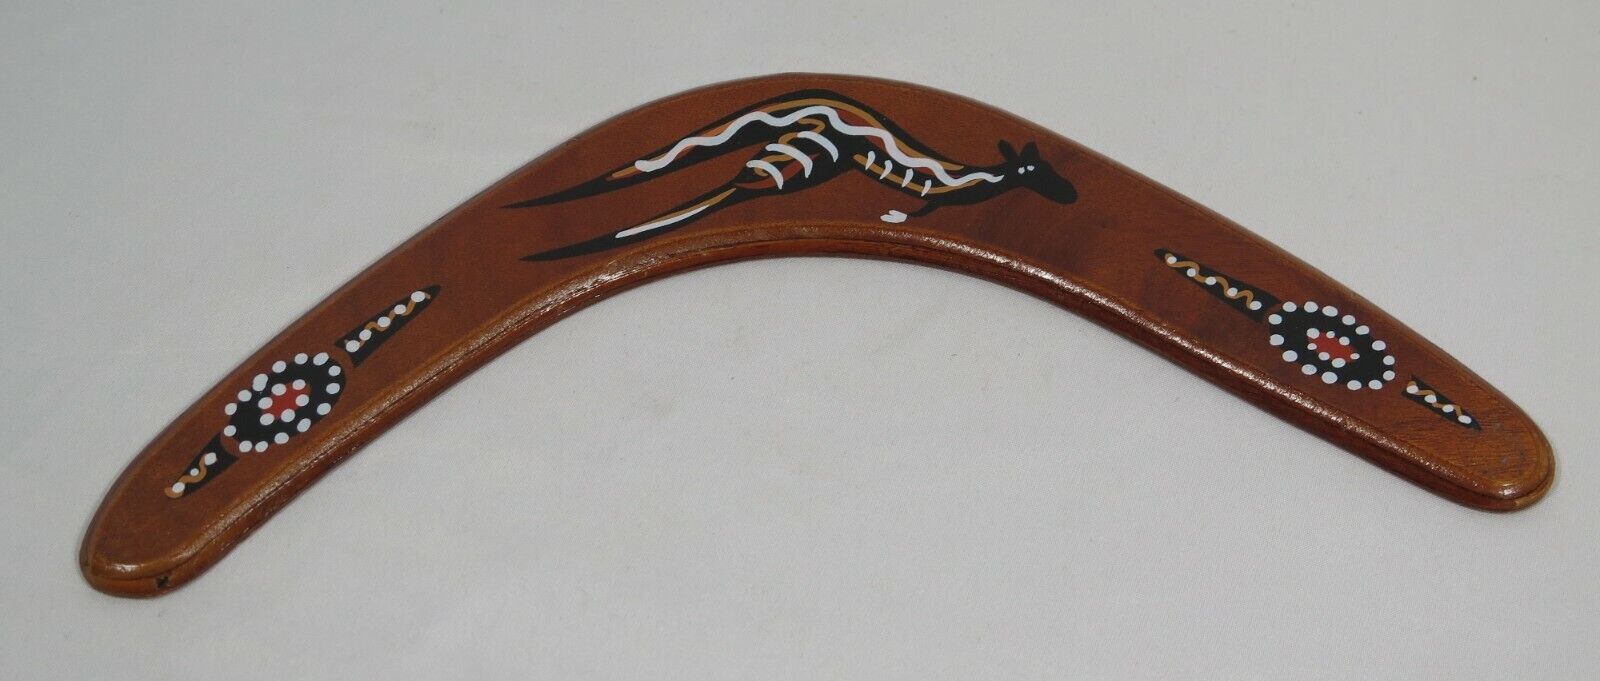 Wood Boomerang featuring a kangaroo Made in Australia